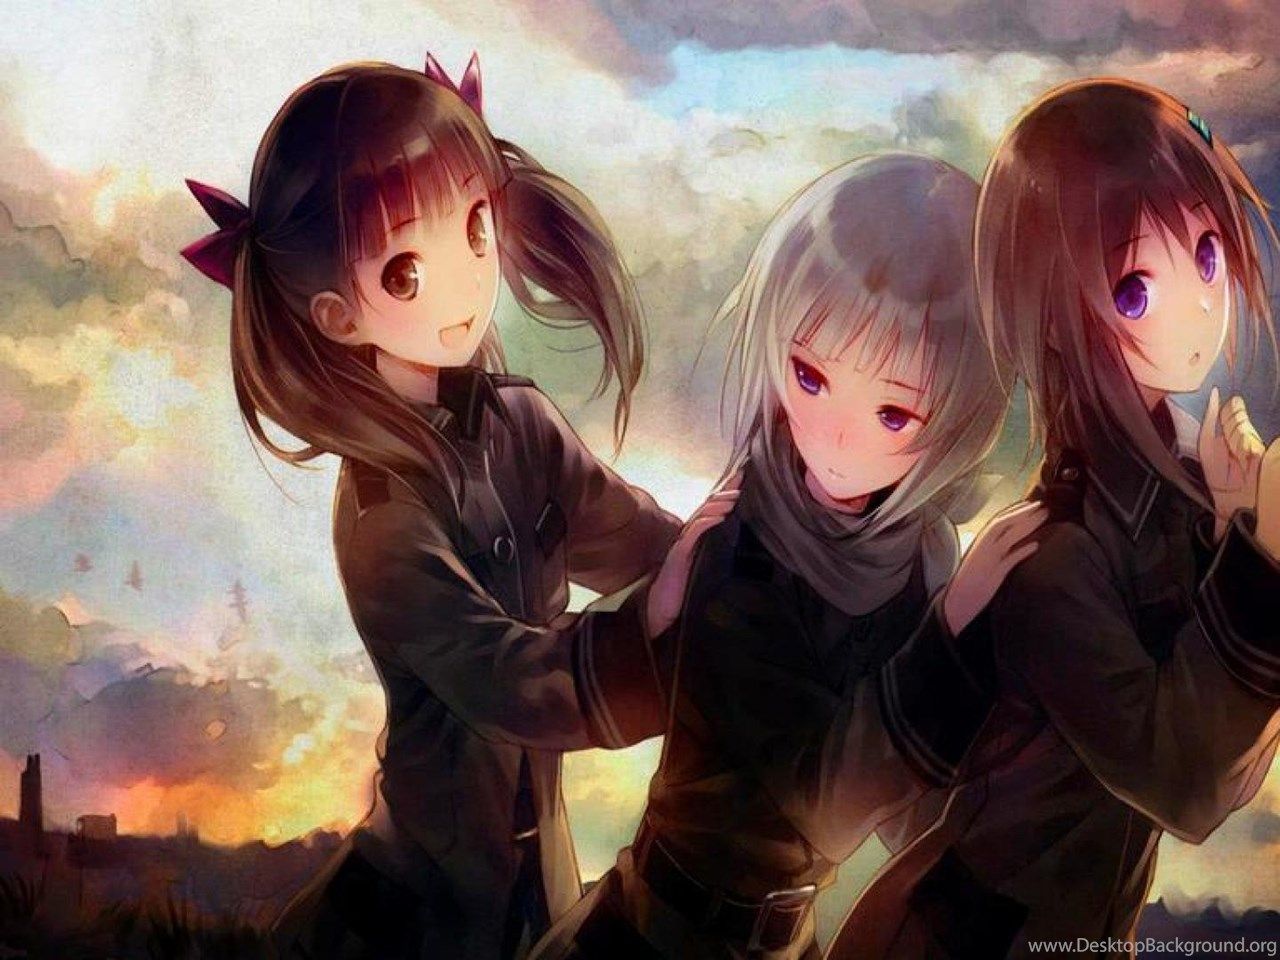 Three Anime Girl Friends On Beach Waves 4K HD Anime Friends Wallpapers  HD  Wallpapers  ID 90064